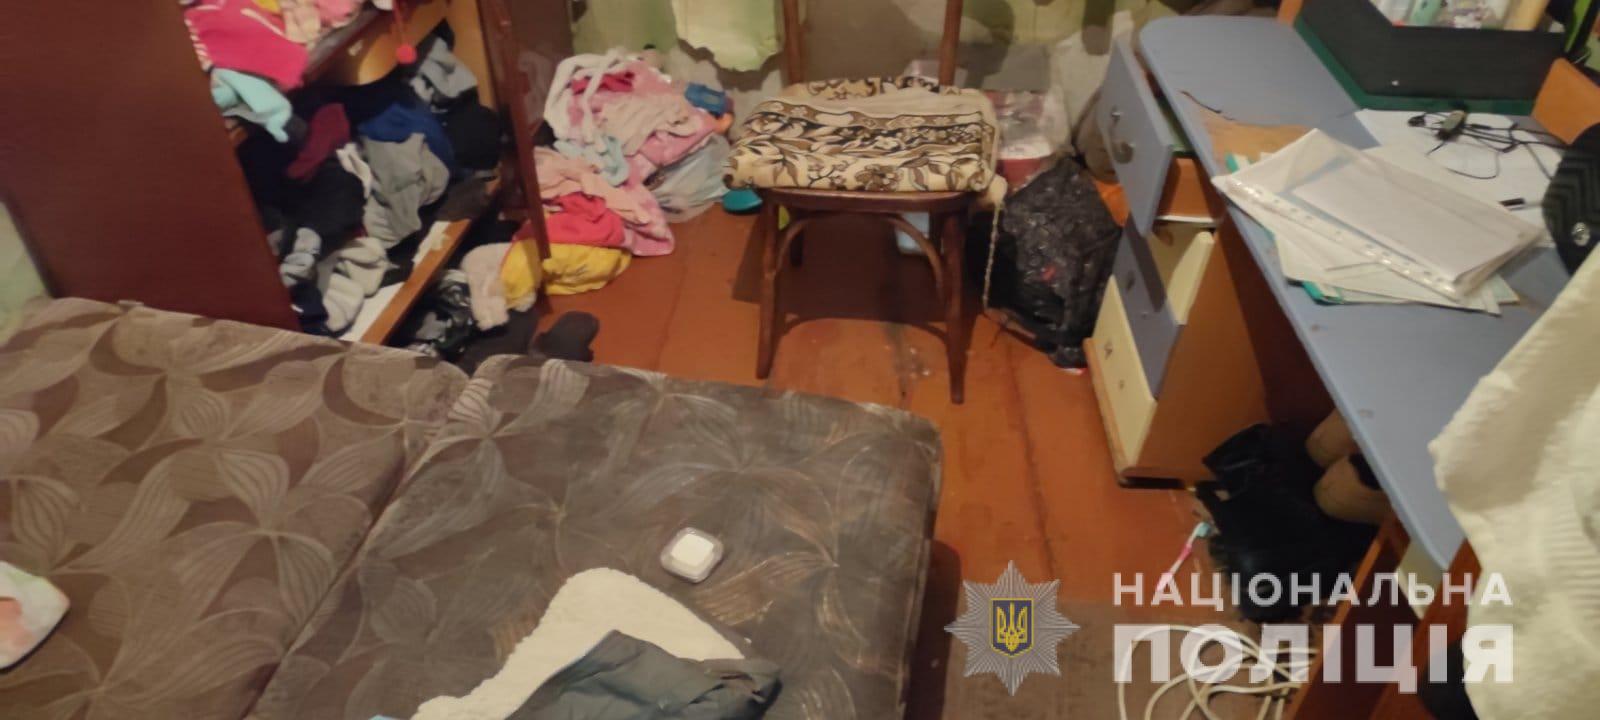 Криминал Харьков: У неадекватной матери забрали ребенка